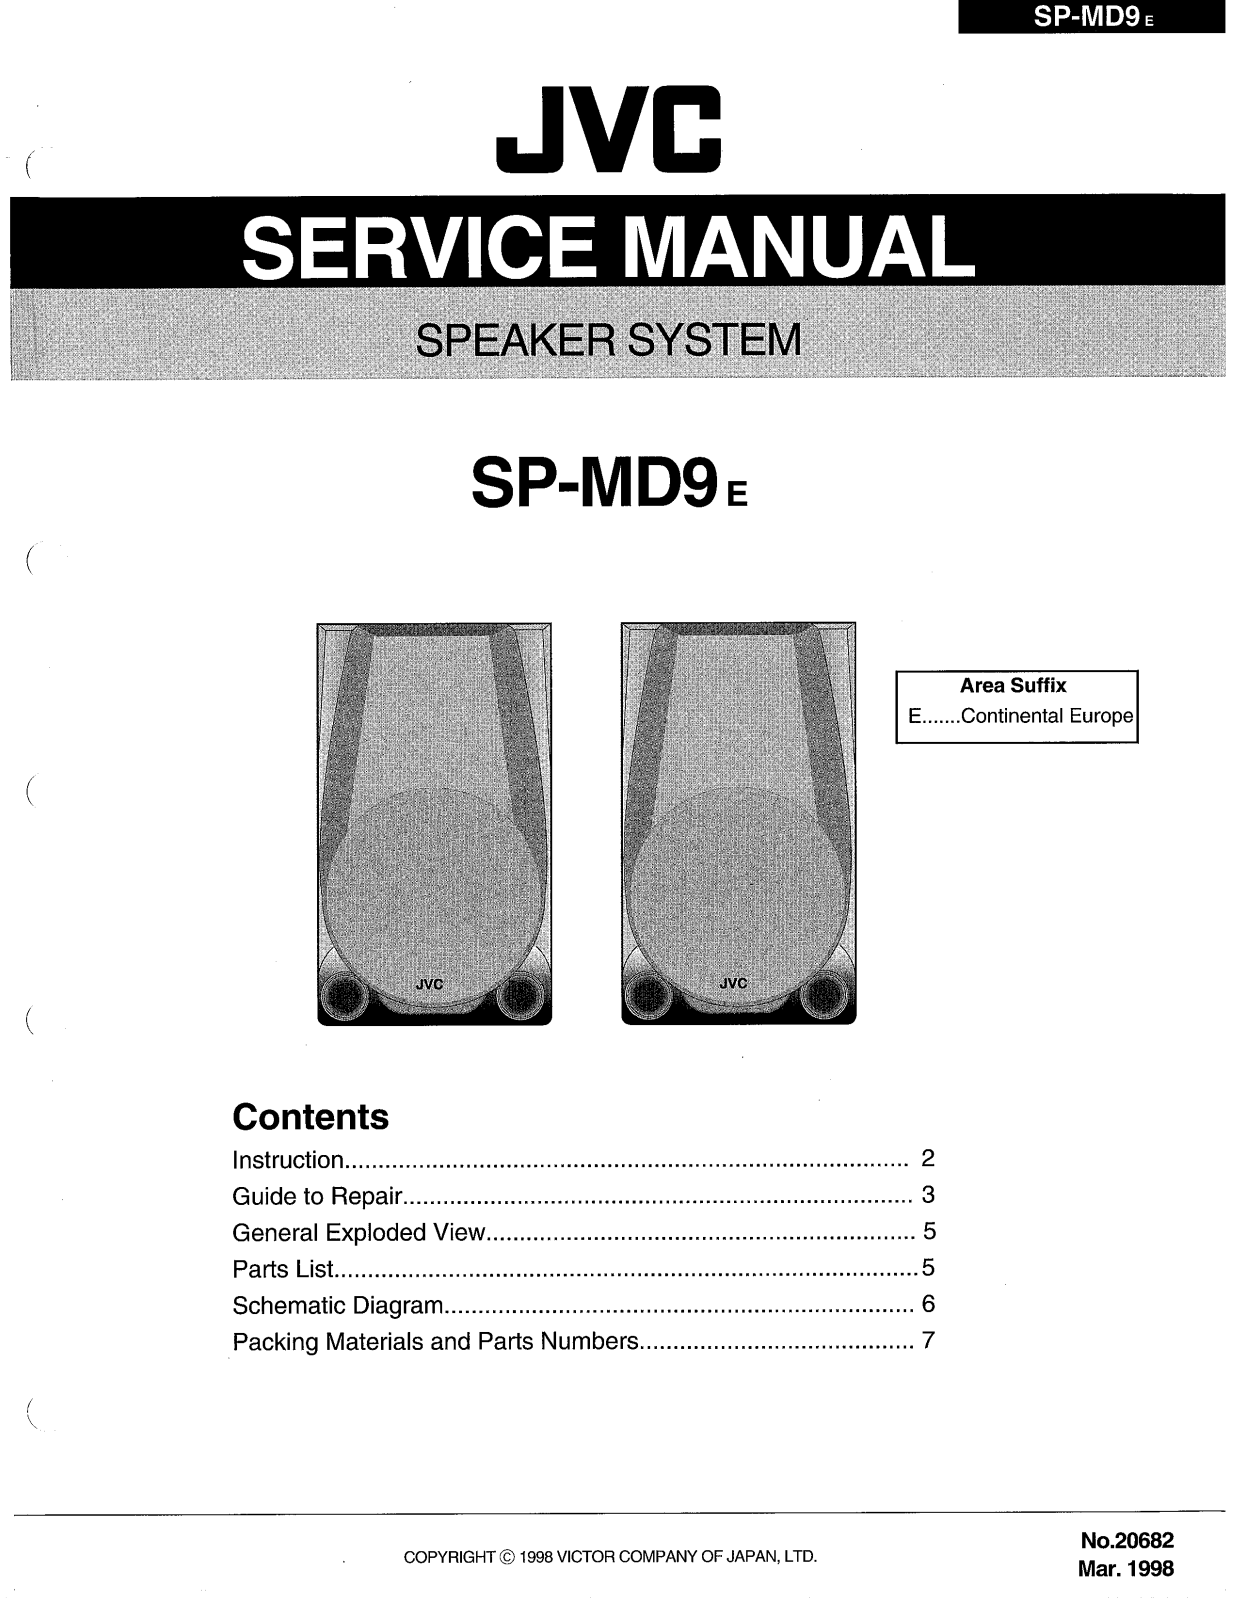 JVC SP-MD9E Service Manual